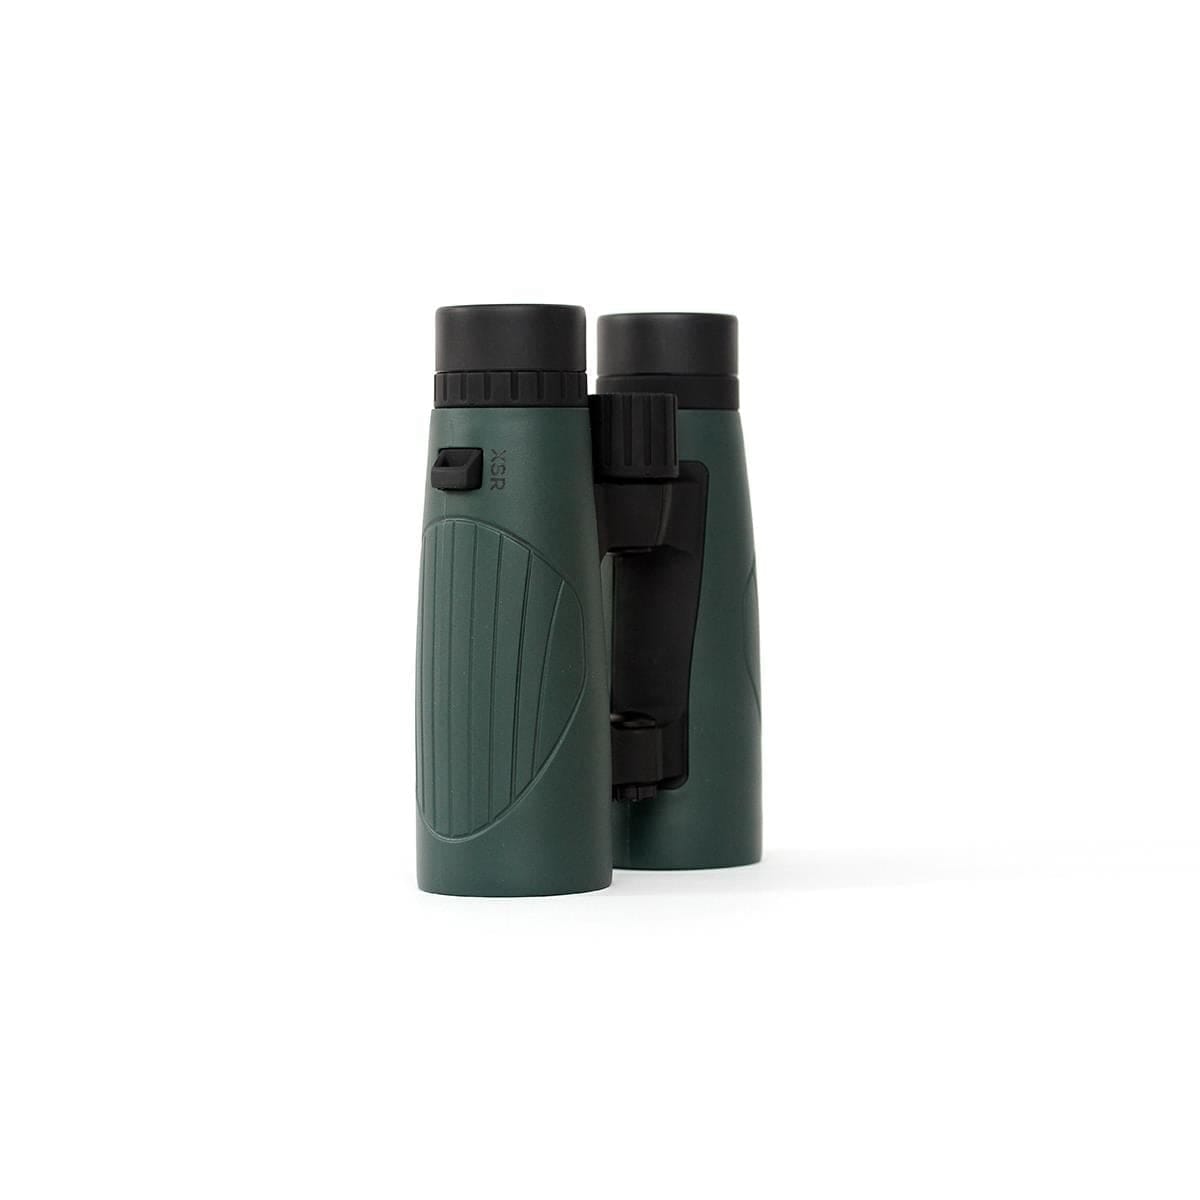 Fortis XSR Binoculars 8 x 42 (Waterproof &amp; FogProof).